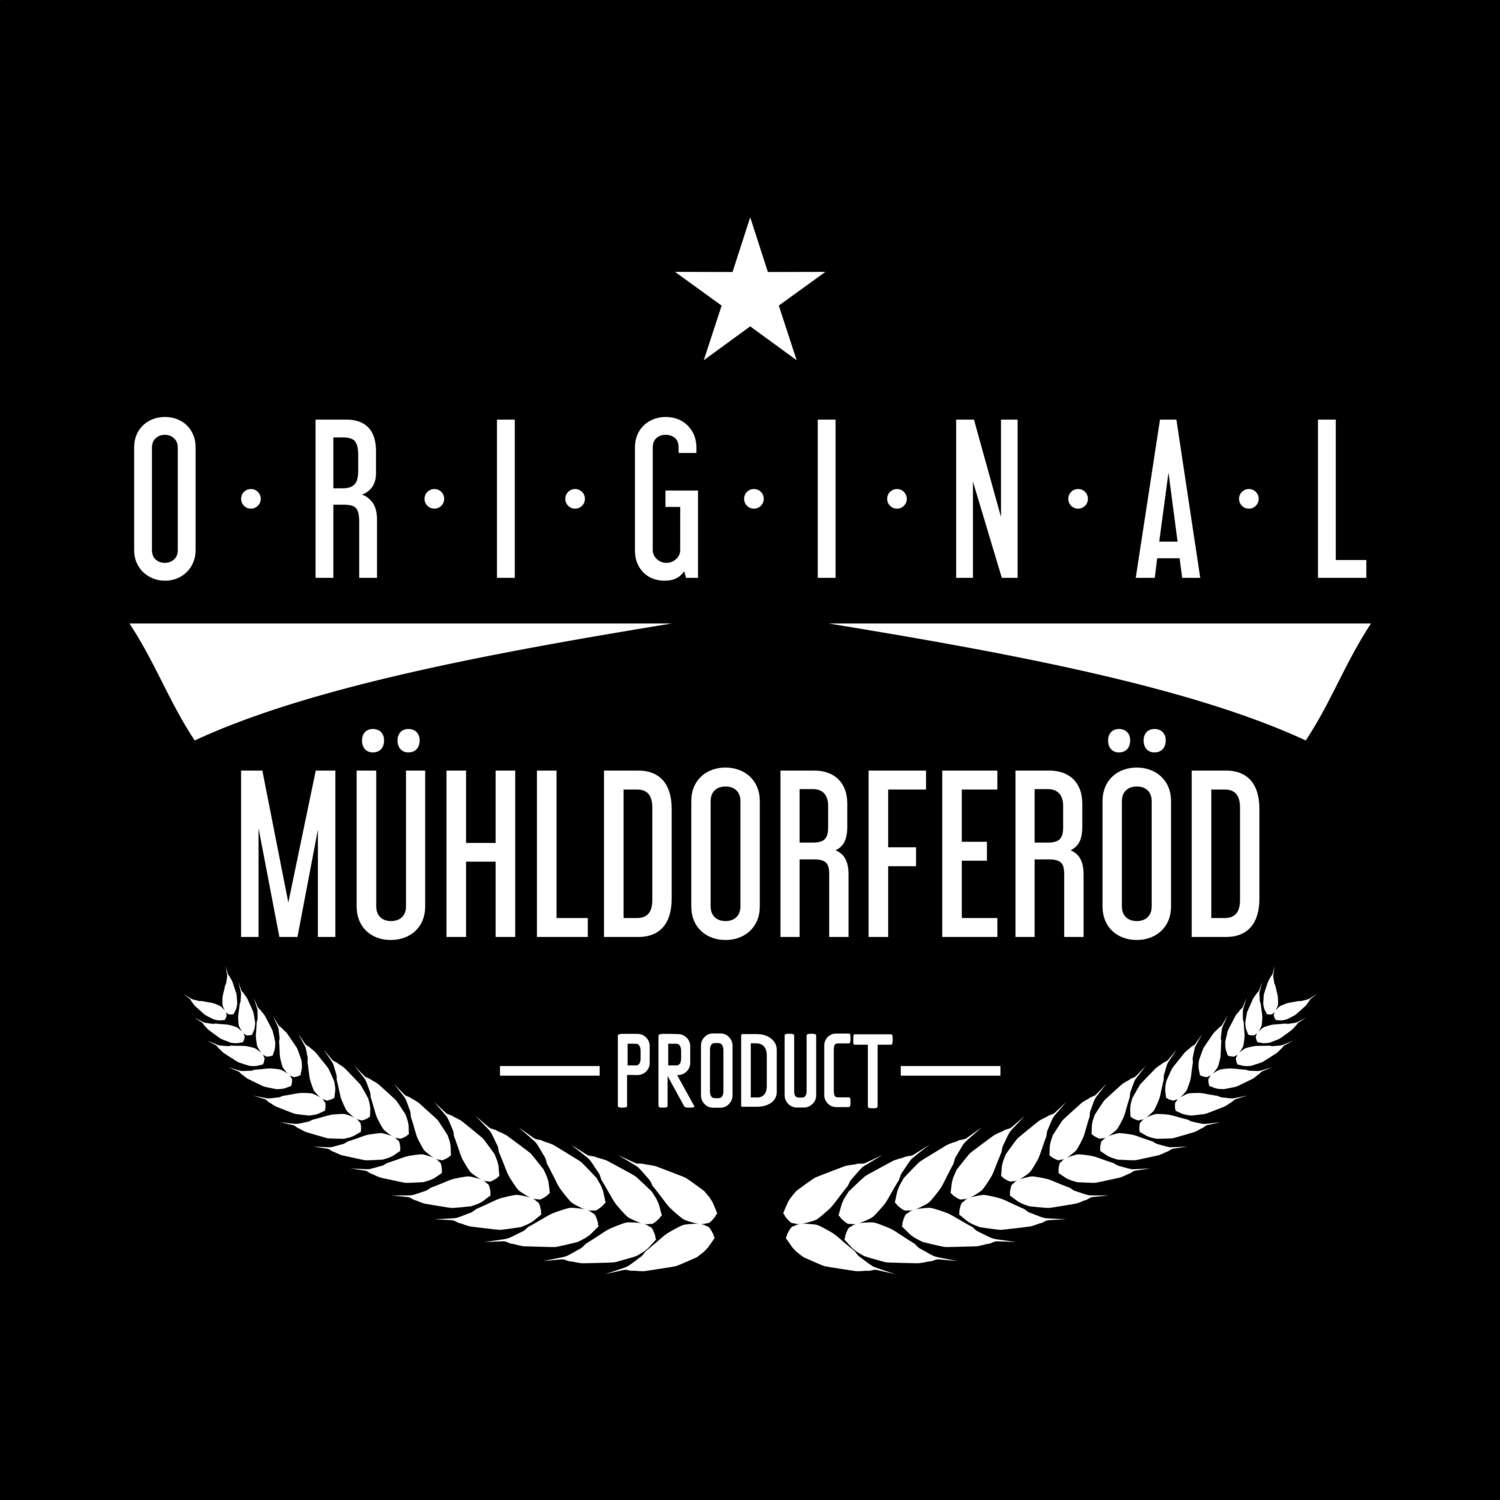 Mühldorferöd T-Shirt »Original Product«